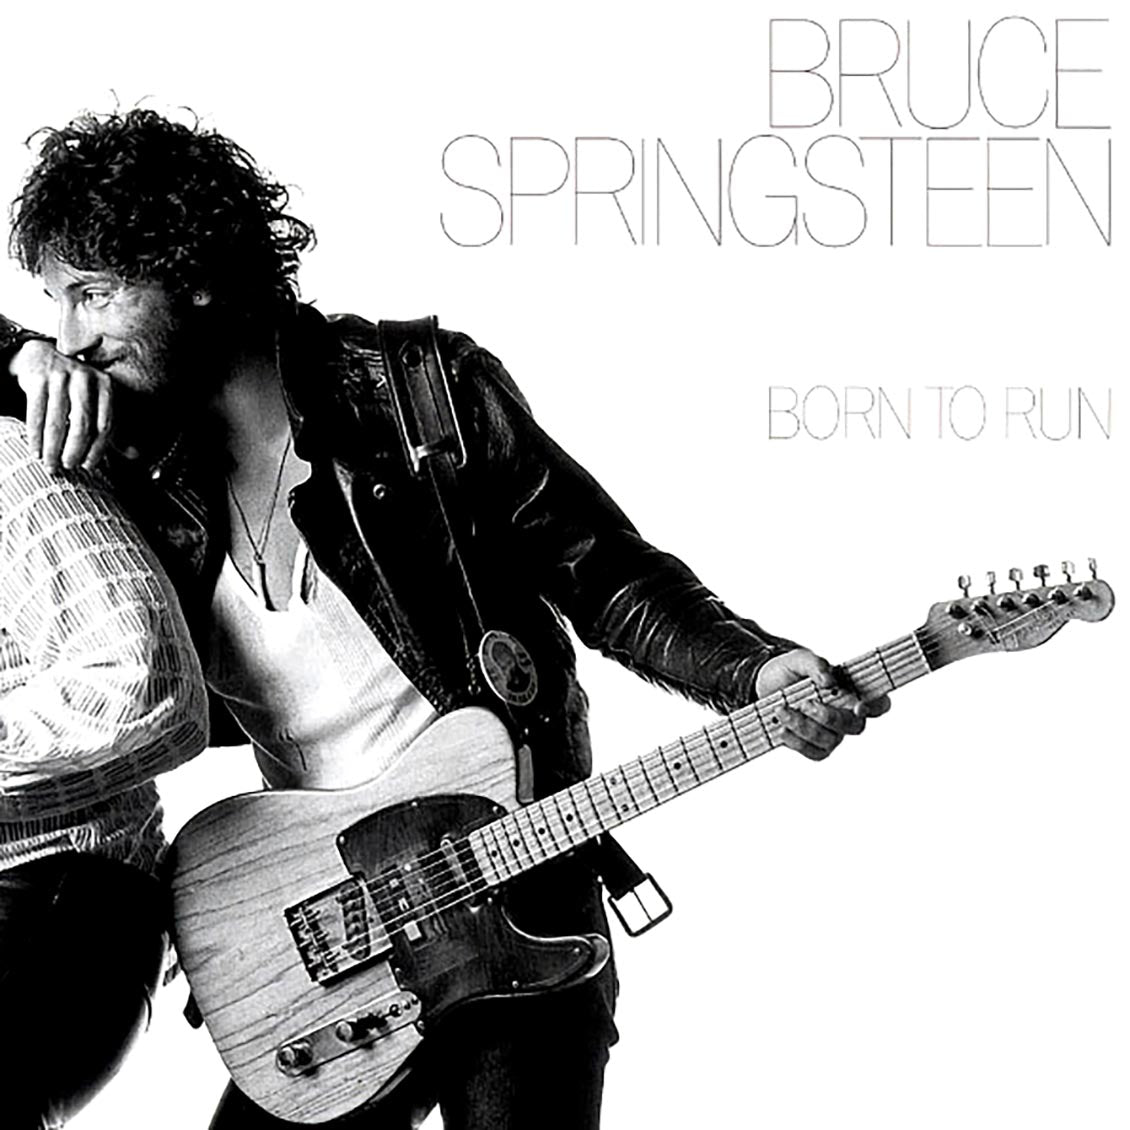 Bruce Springsteen - Born To Run (incl. mp3) (180g) (audiophile) - Vinyl LP